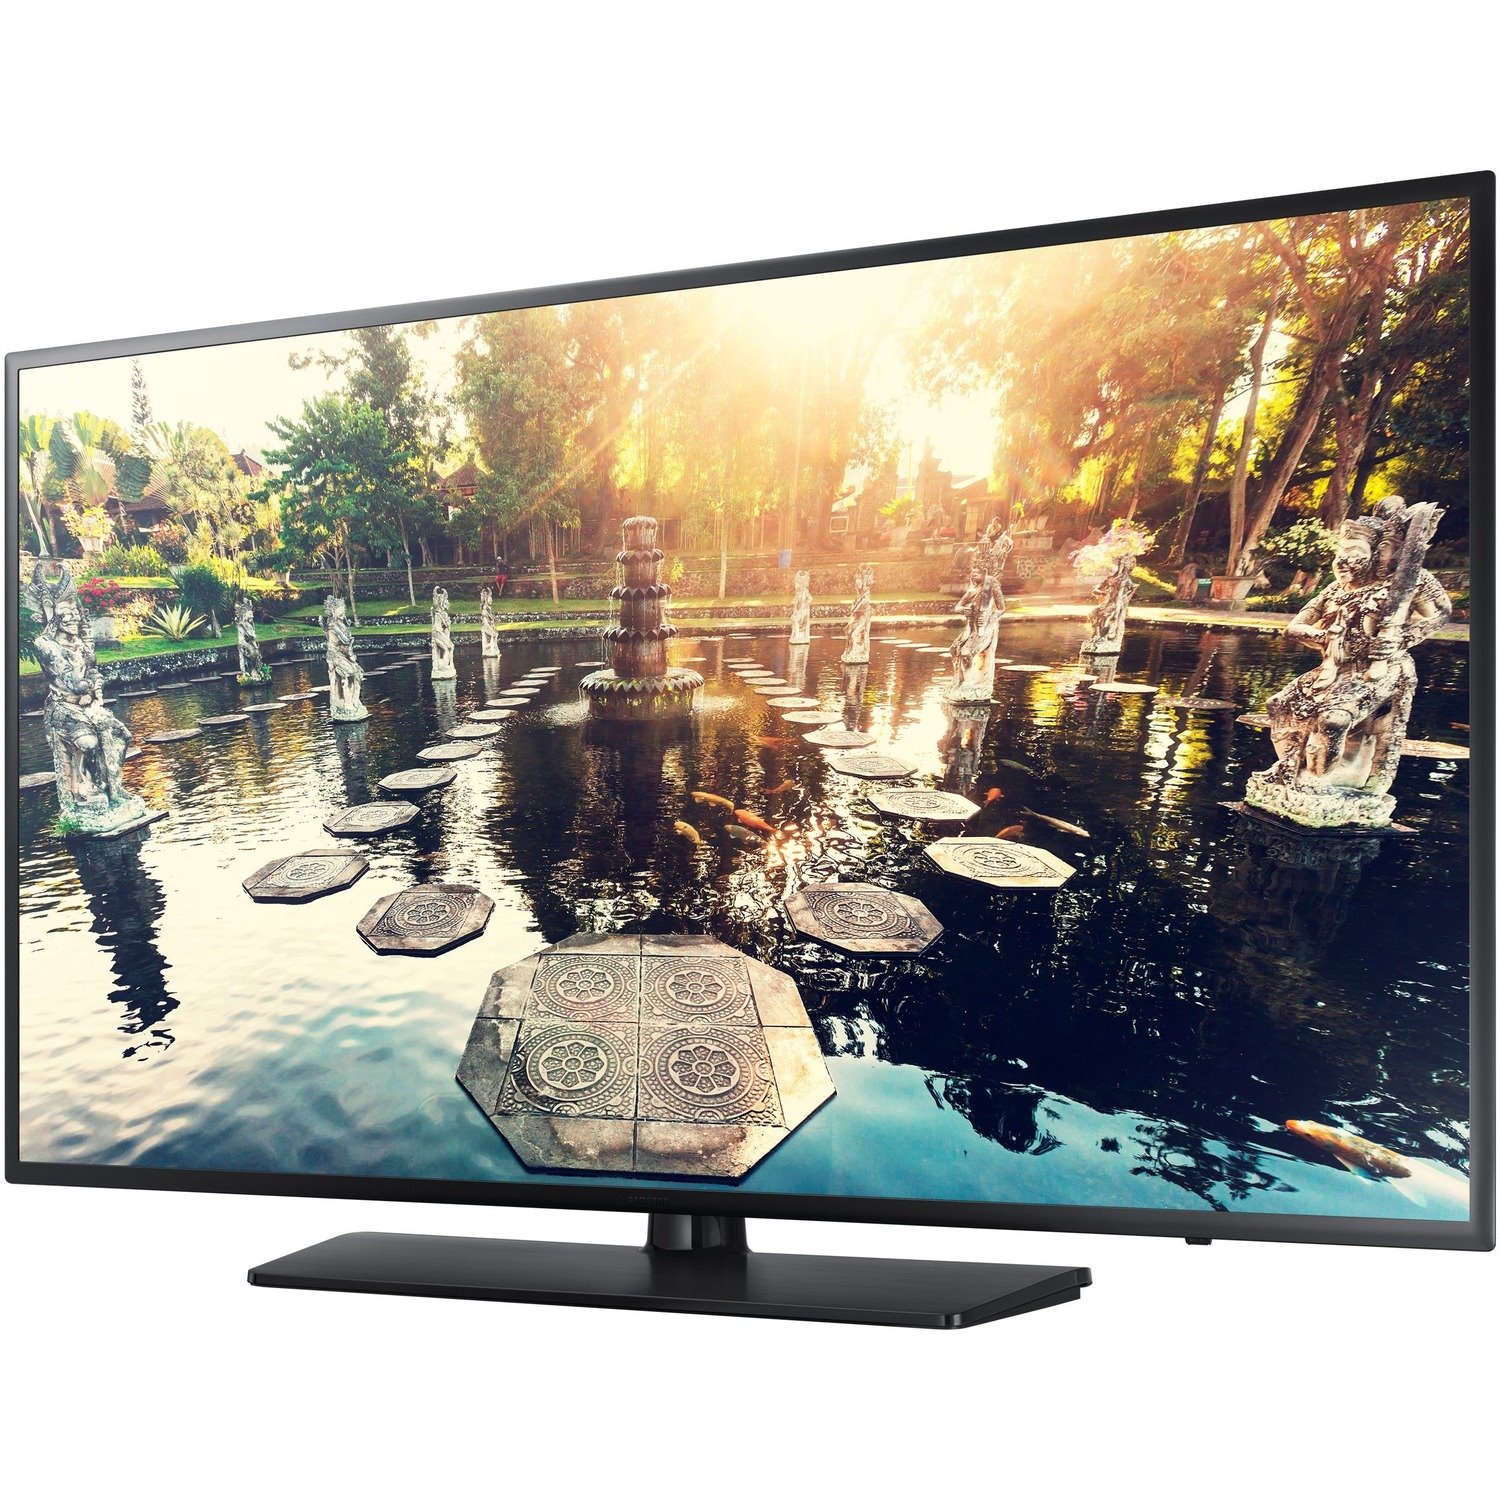 Samsung 690 HG32AE690DW 80 cm LED-LCD TV - HDTV